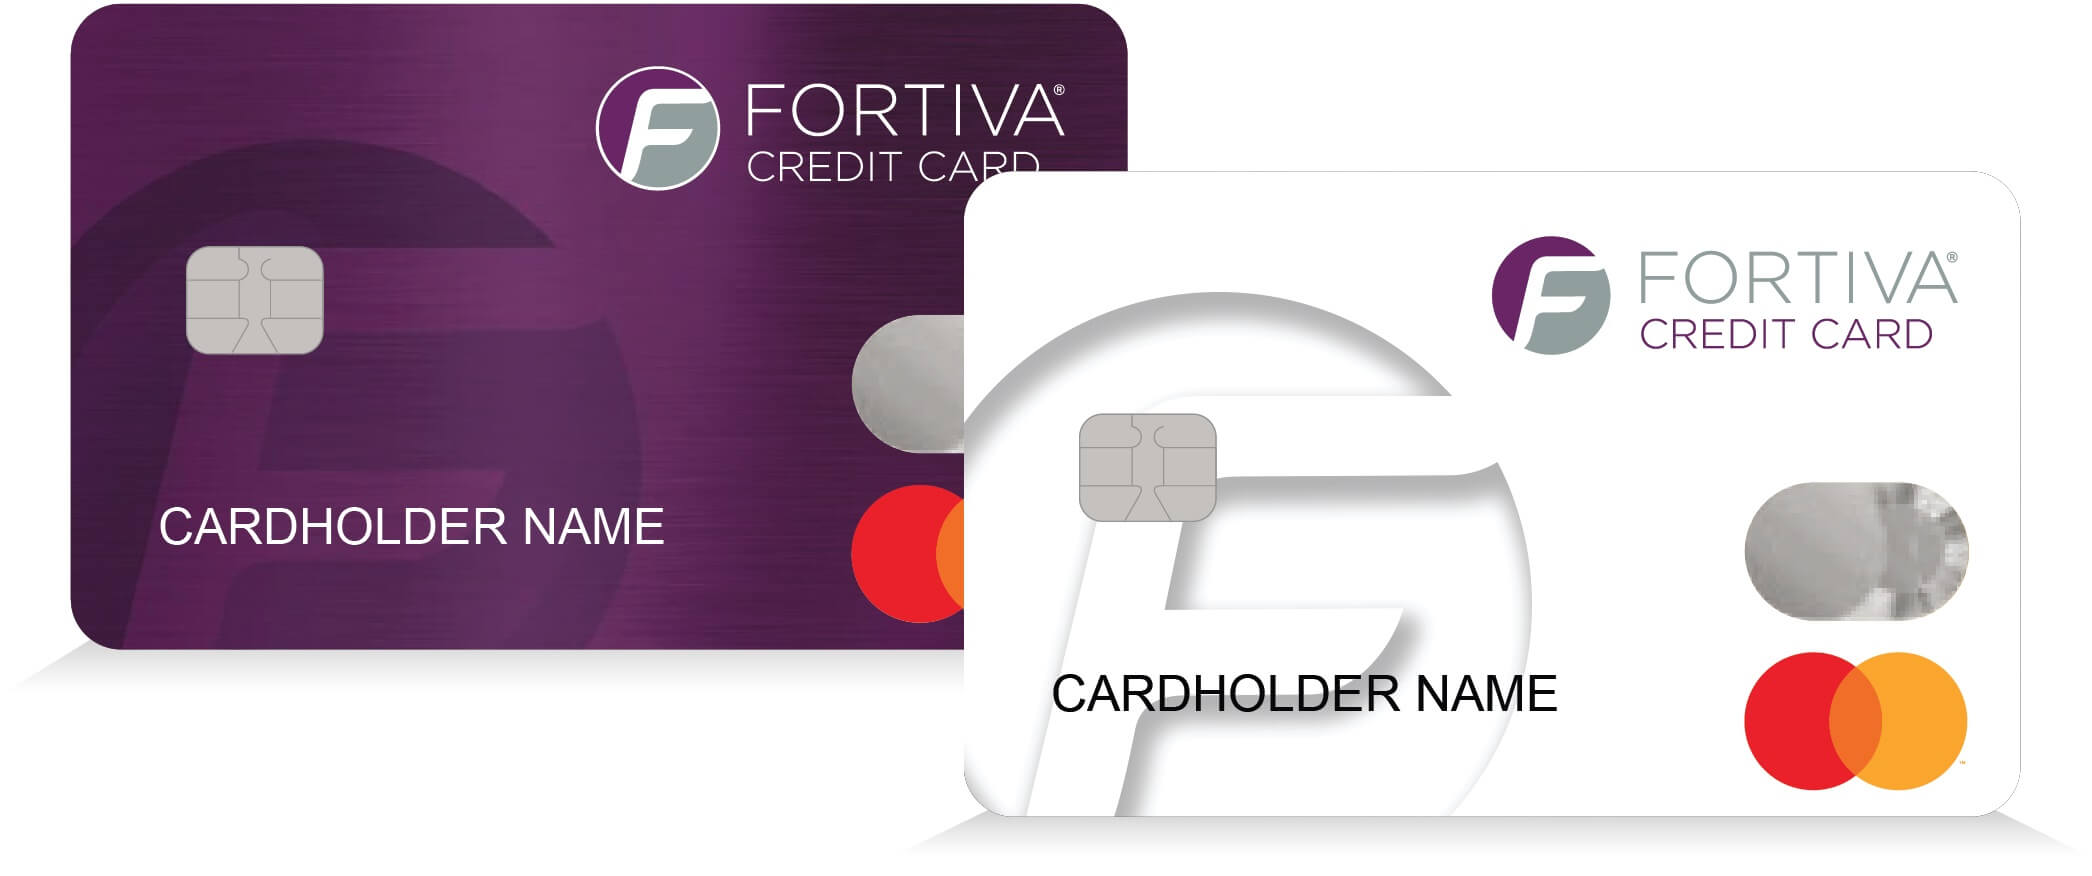 fortiva credit card login